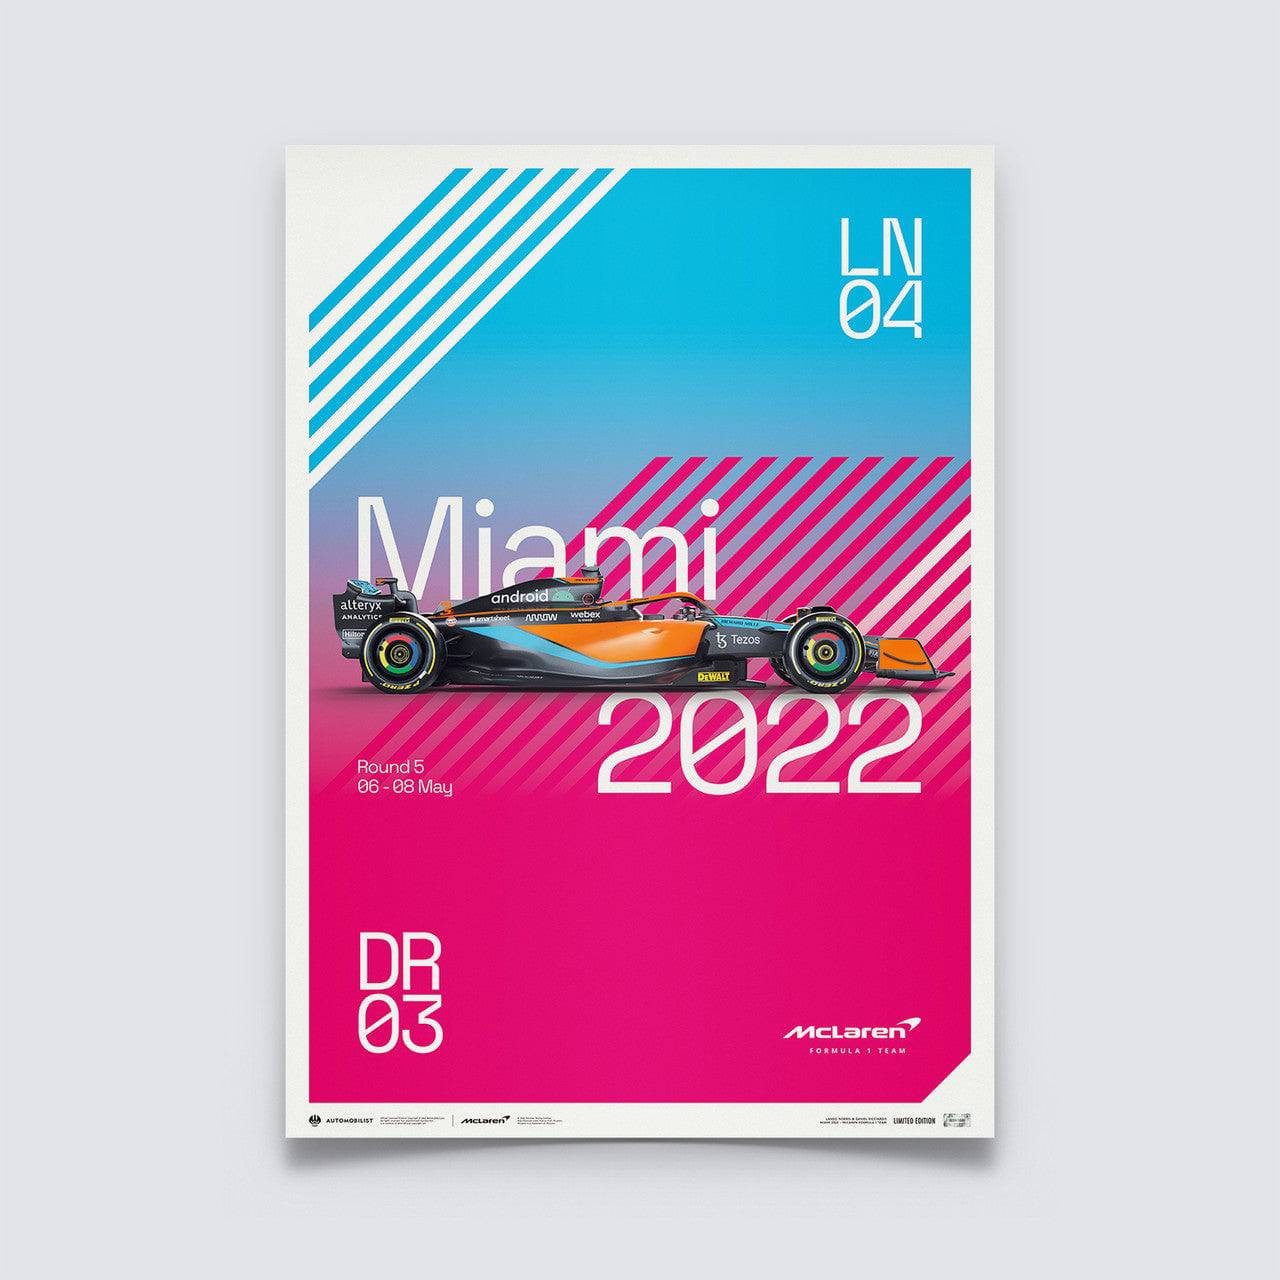 McLaren Formula 1 Team - Miami 2022 | Limited Edition